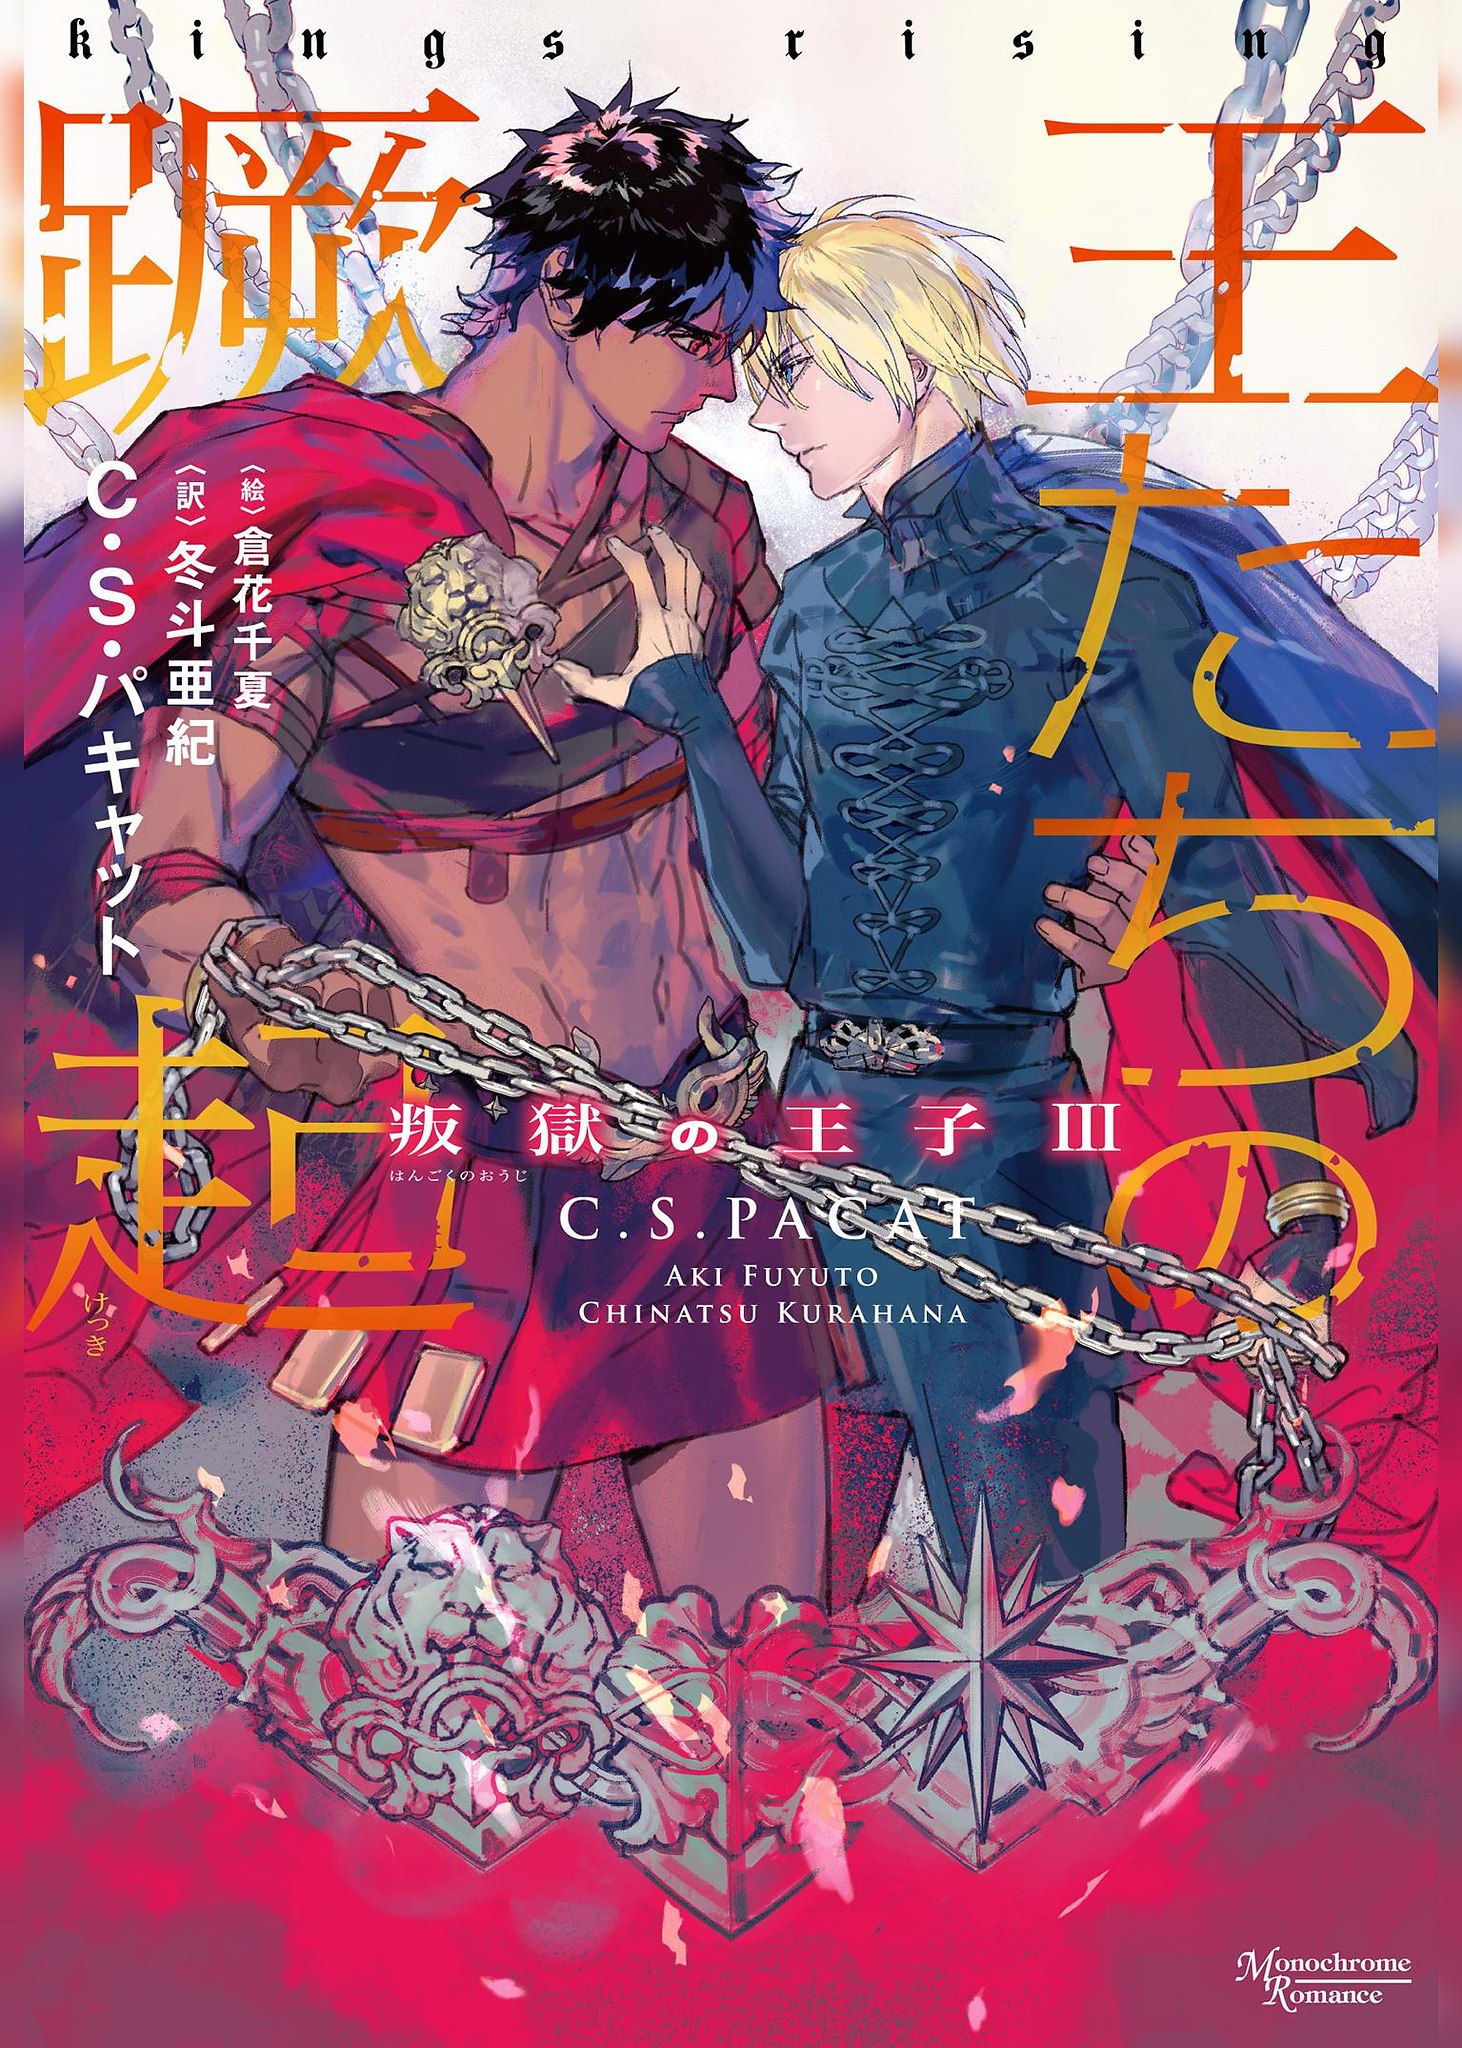 Captive Prince Series - official book covers: Japanese: artist - Chinatsu Kurahana; Taiwanese: ... - 3